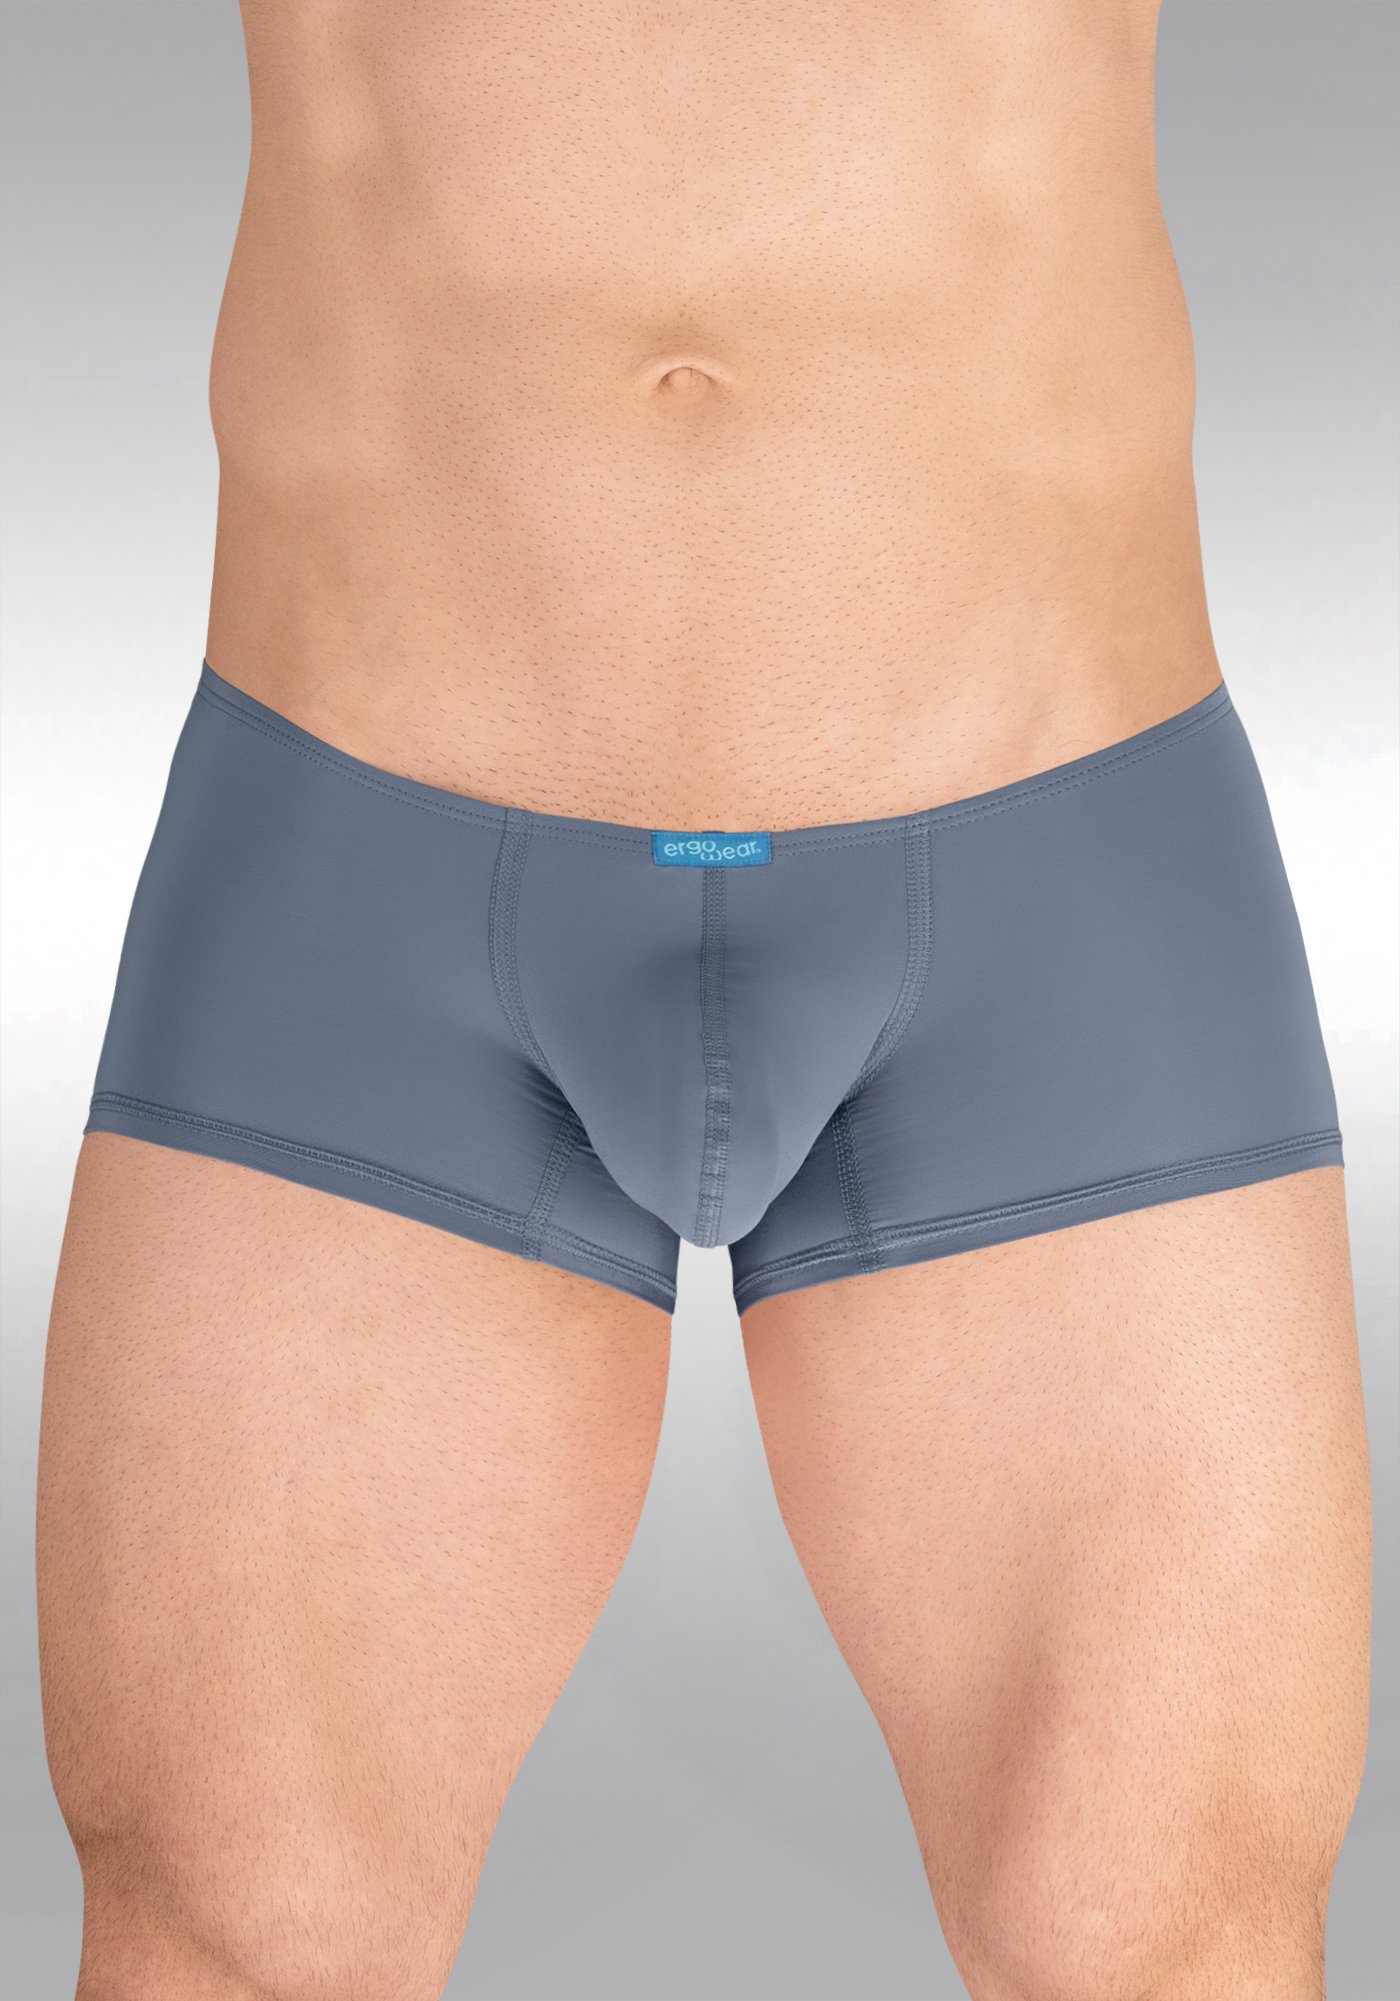 New Men's Underwear With a Pouch ✓✓✓ Just ERGOWEAR them!